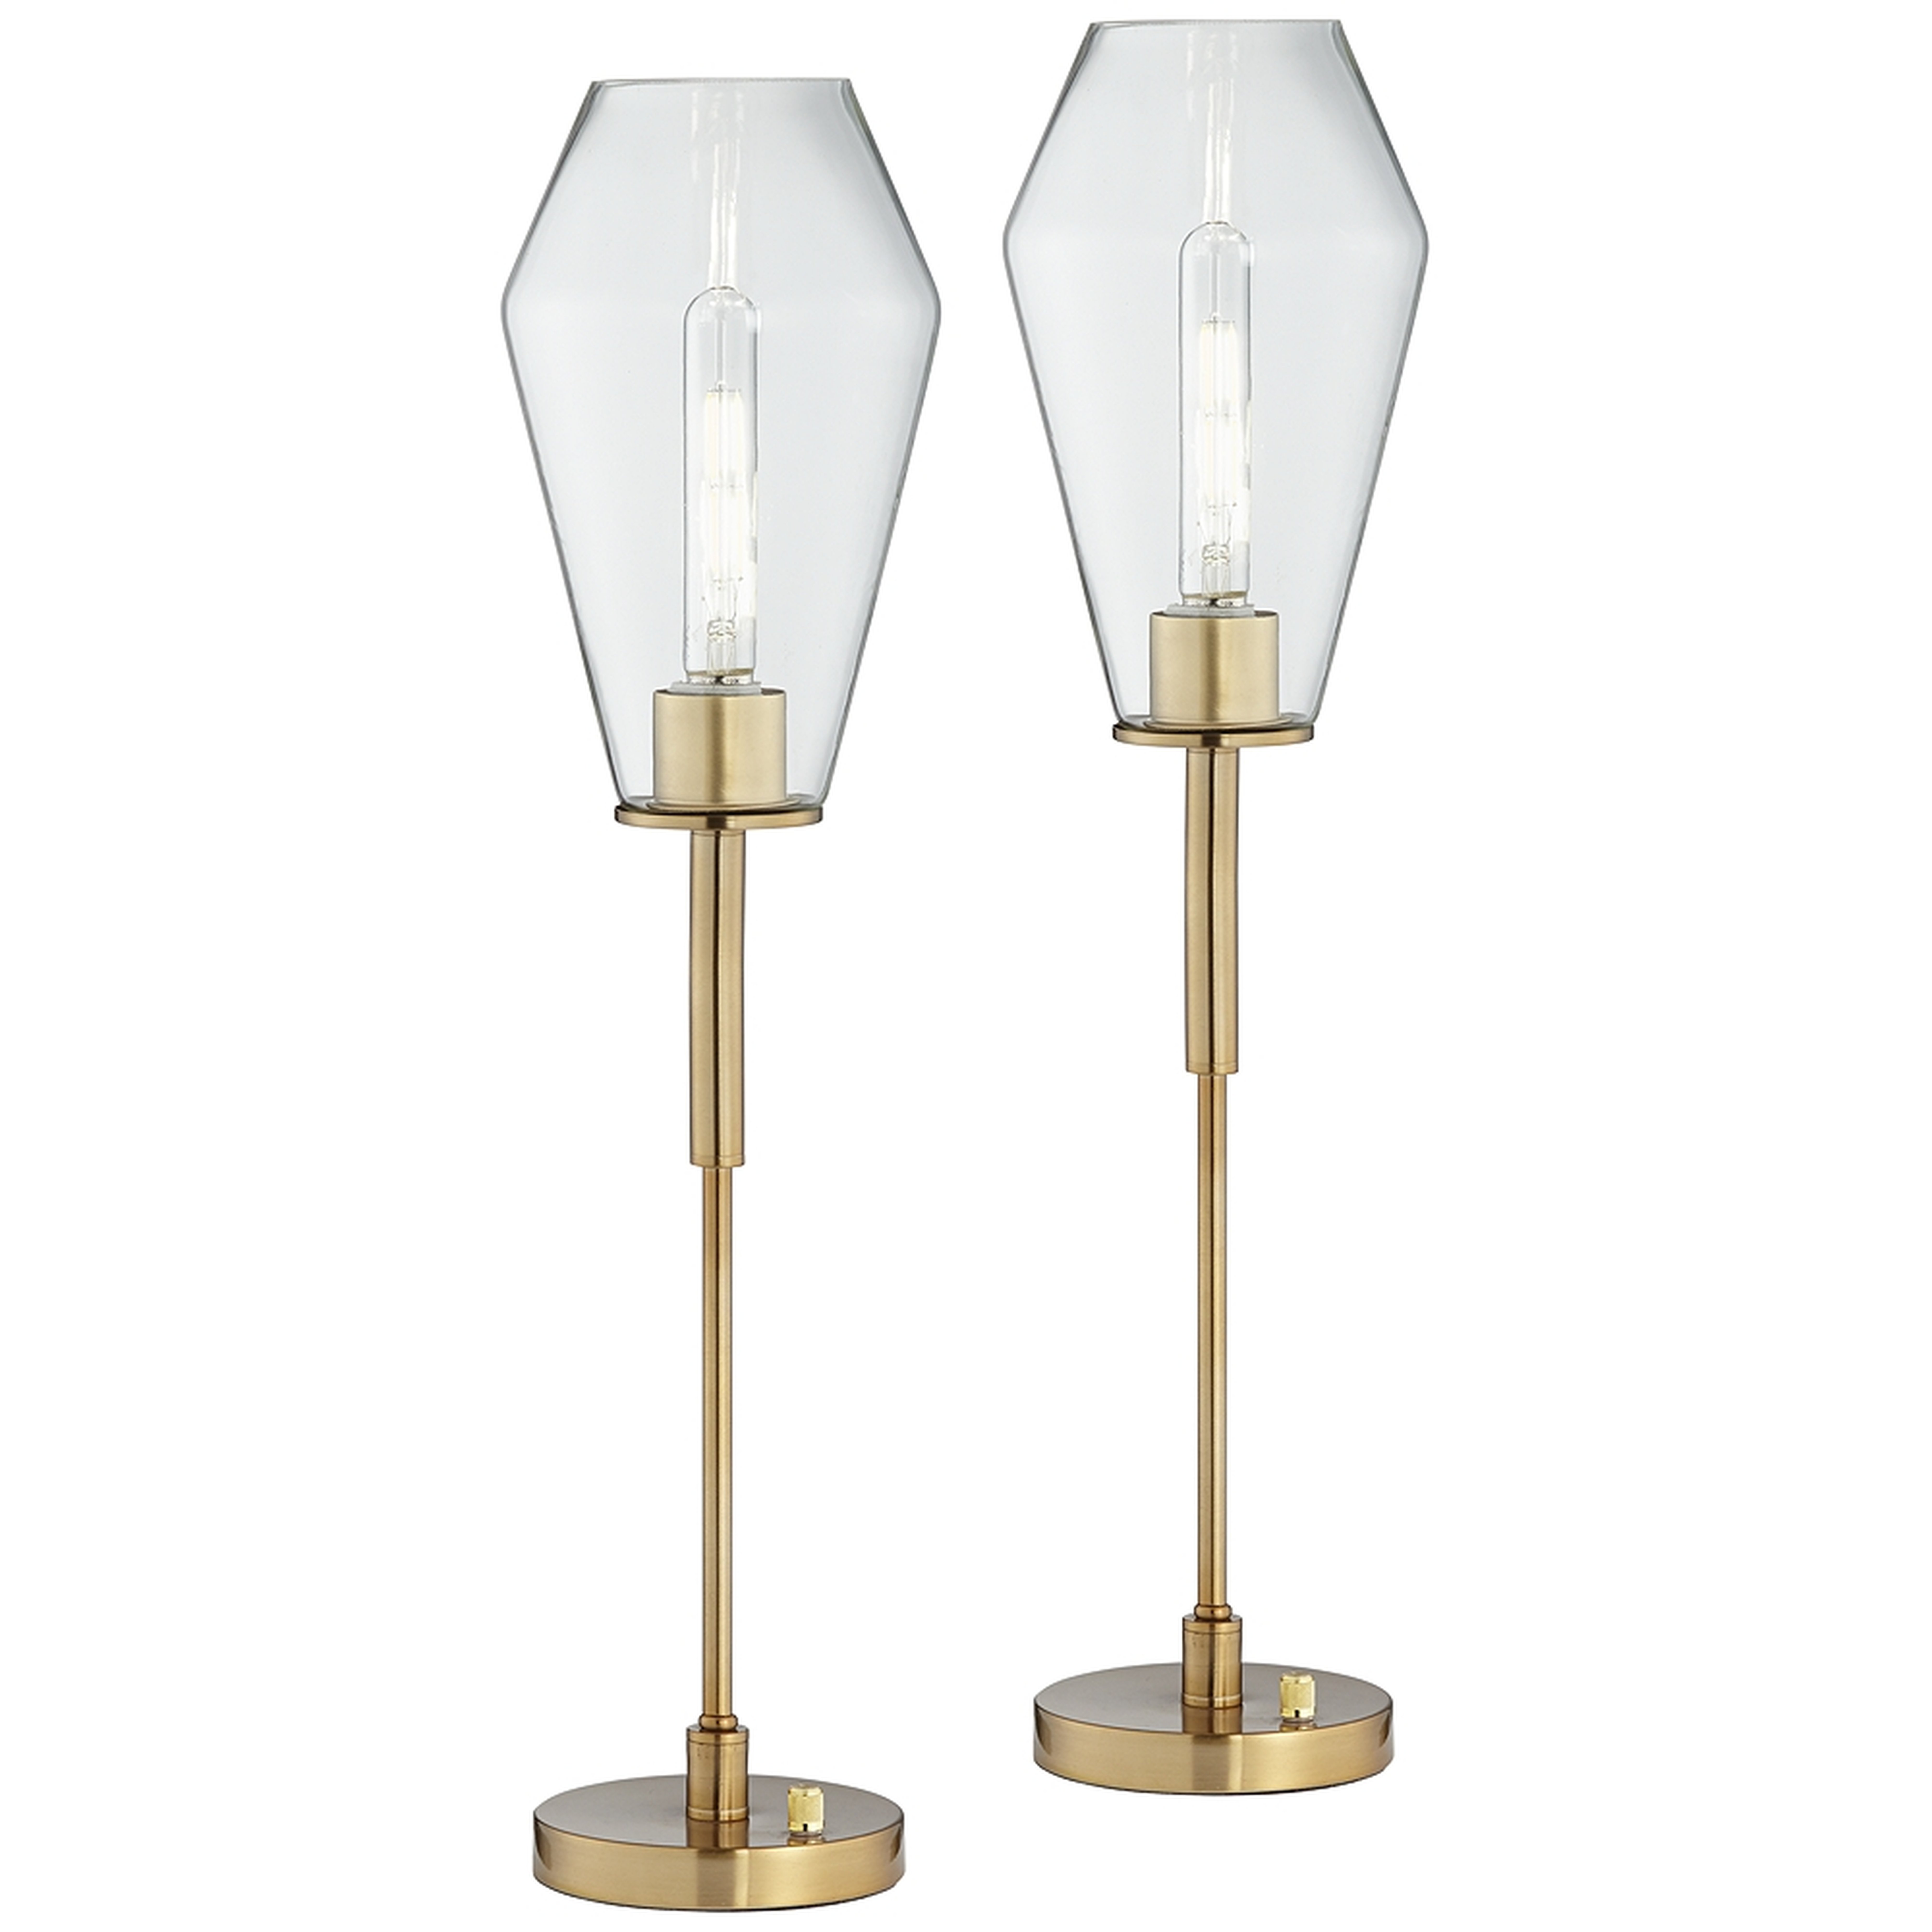 Ellis Gold Metal Uplight Console Table Lamps Set of 2 - Style # 66D46 - Lamps Plus